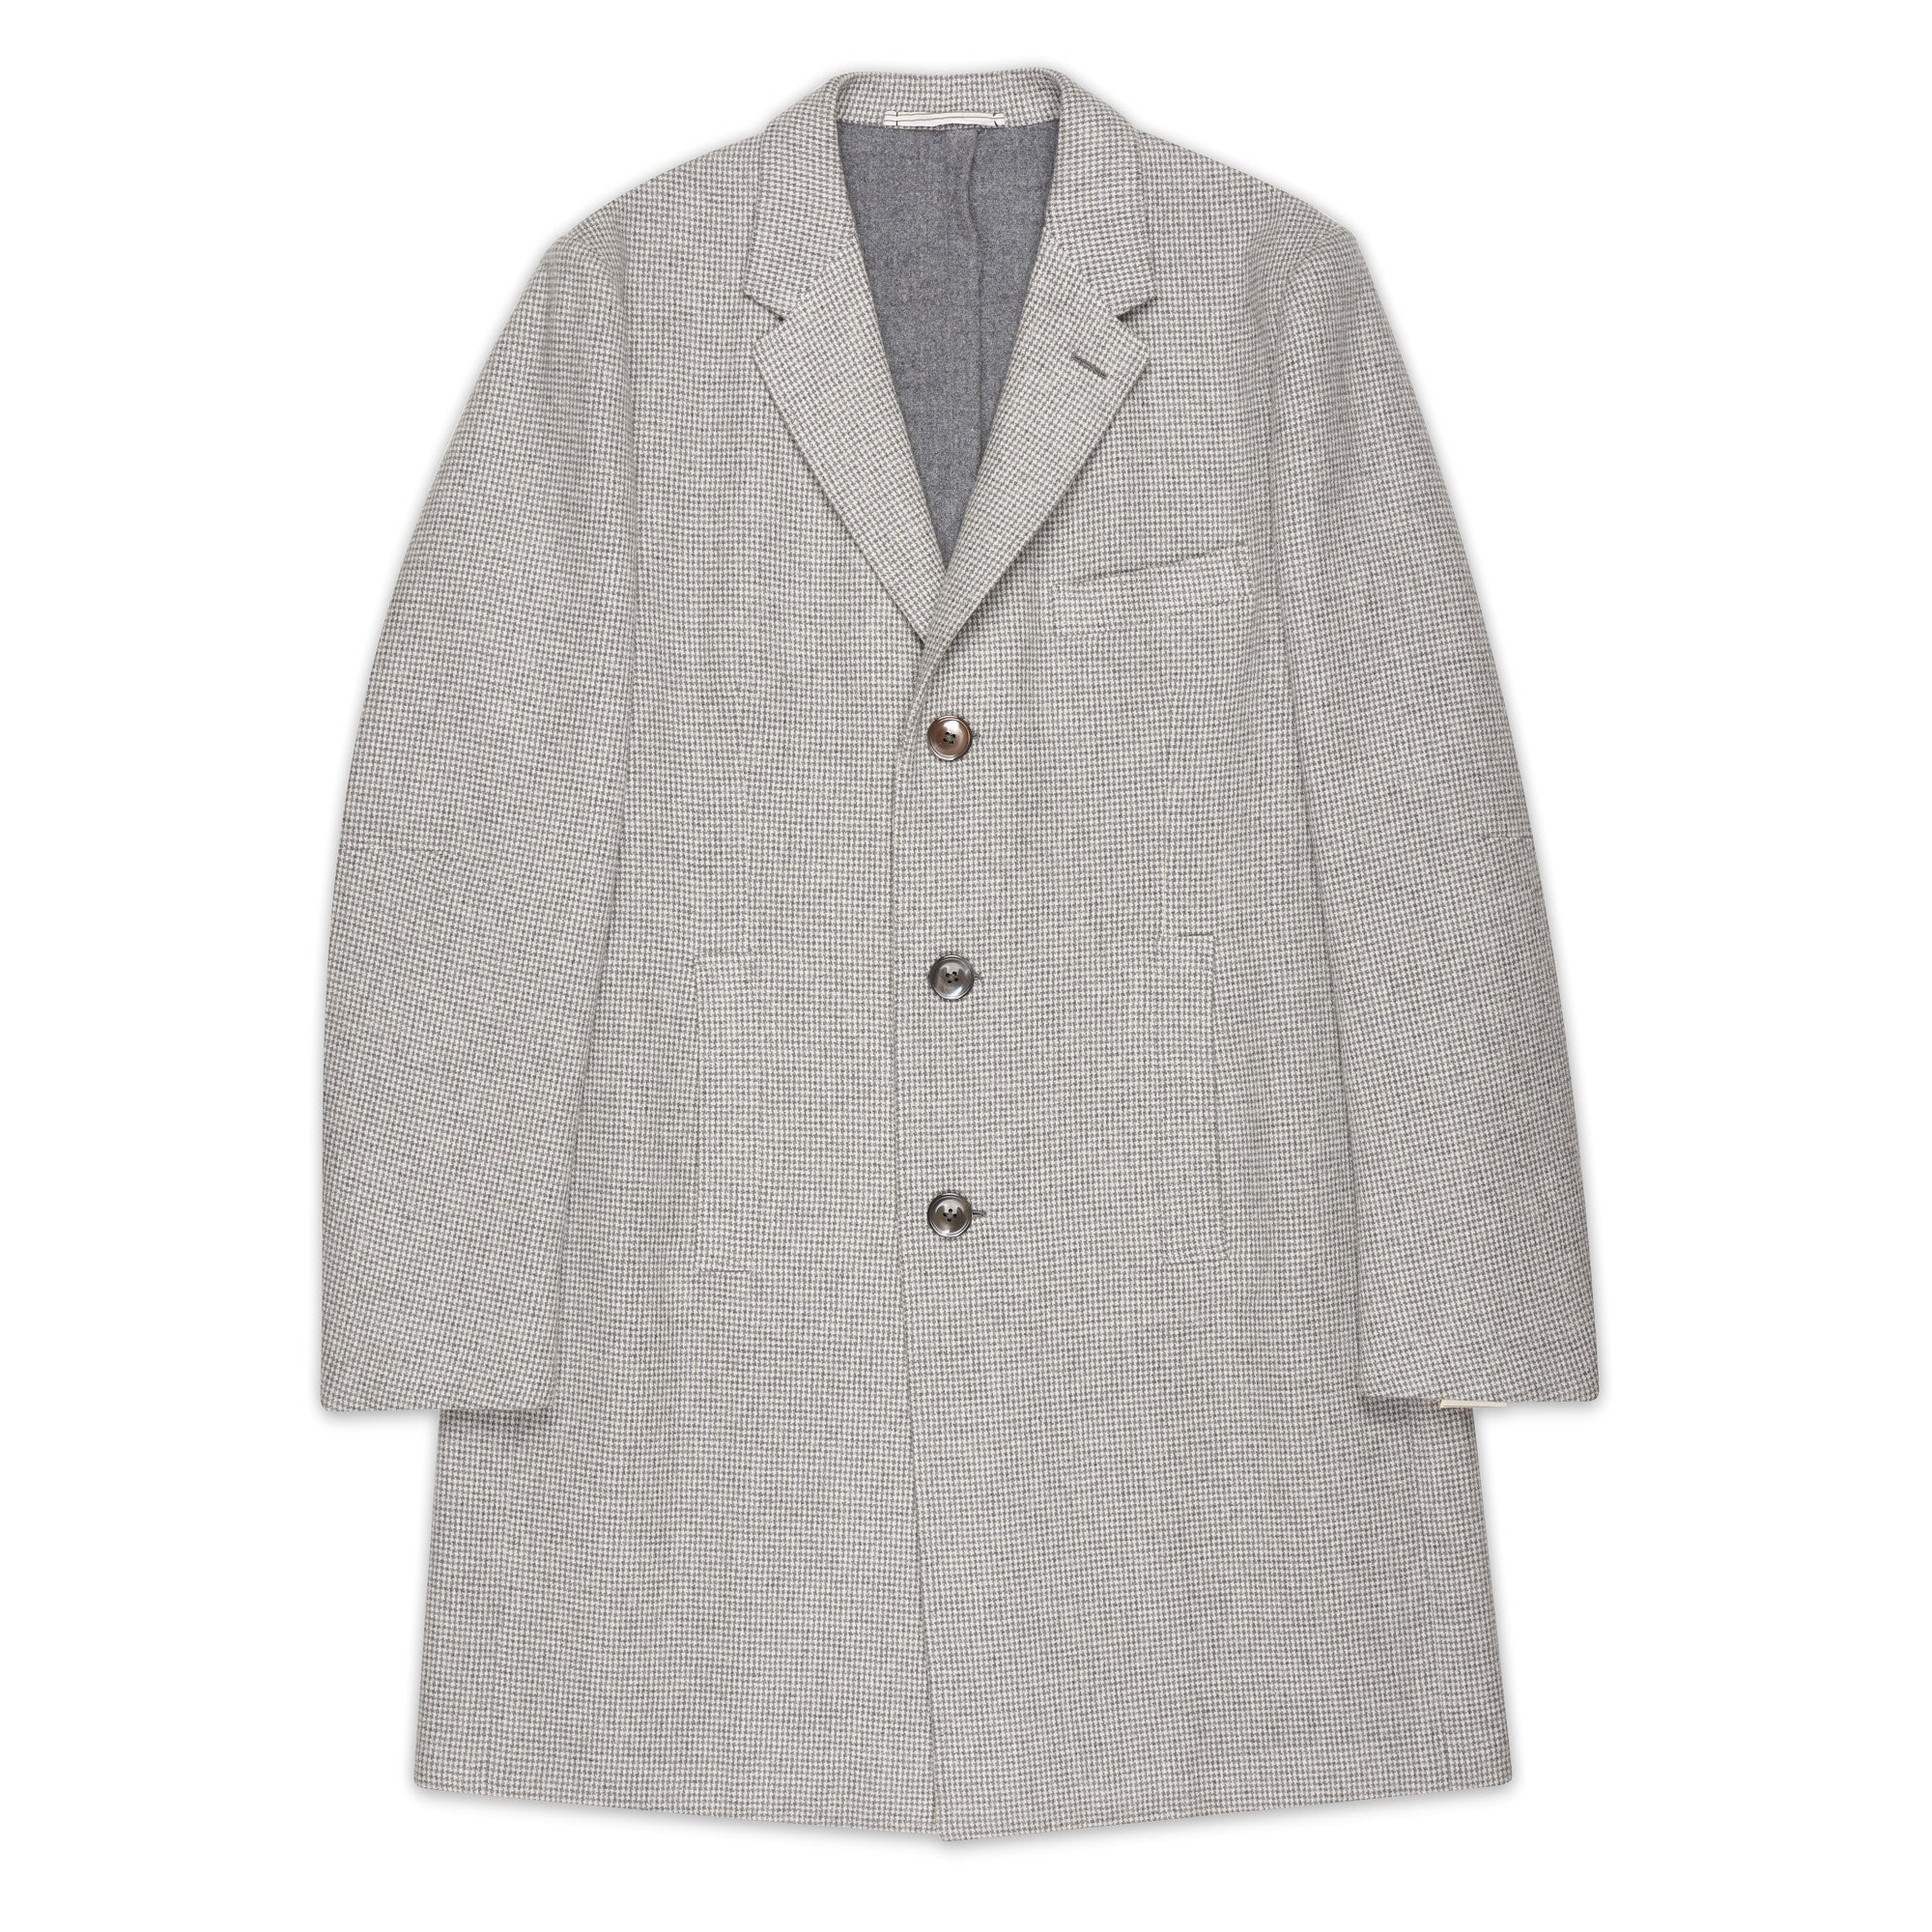 D'AVENZA Handmade Gray Houndstooth Wool Cashmere Coat EU 50 NEW US M ...